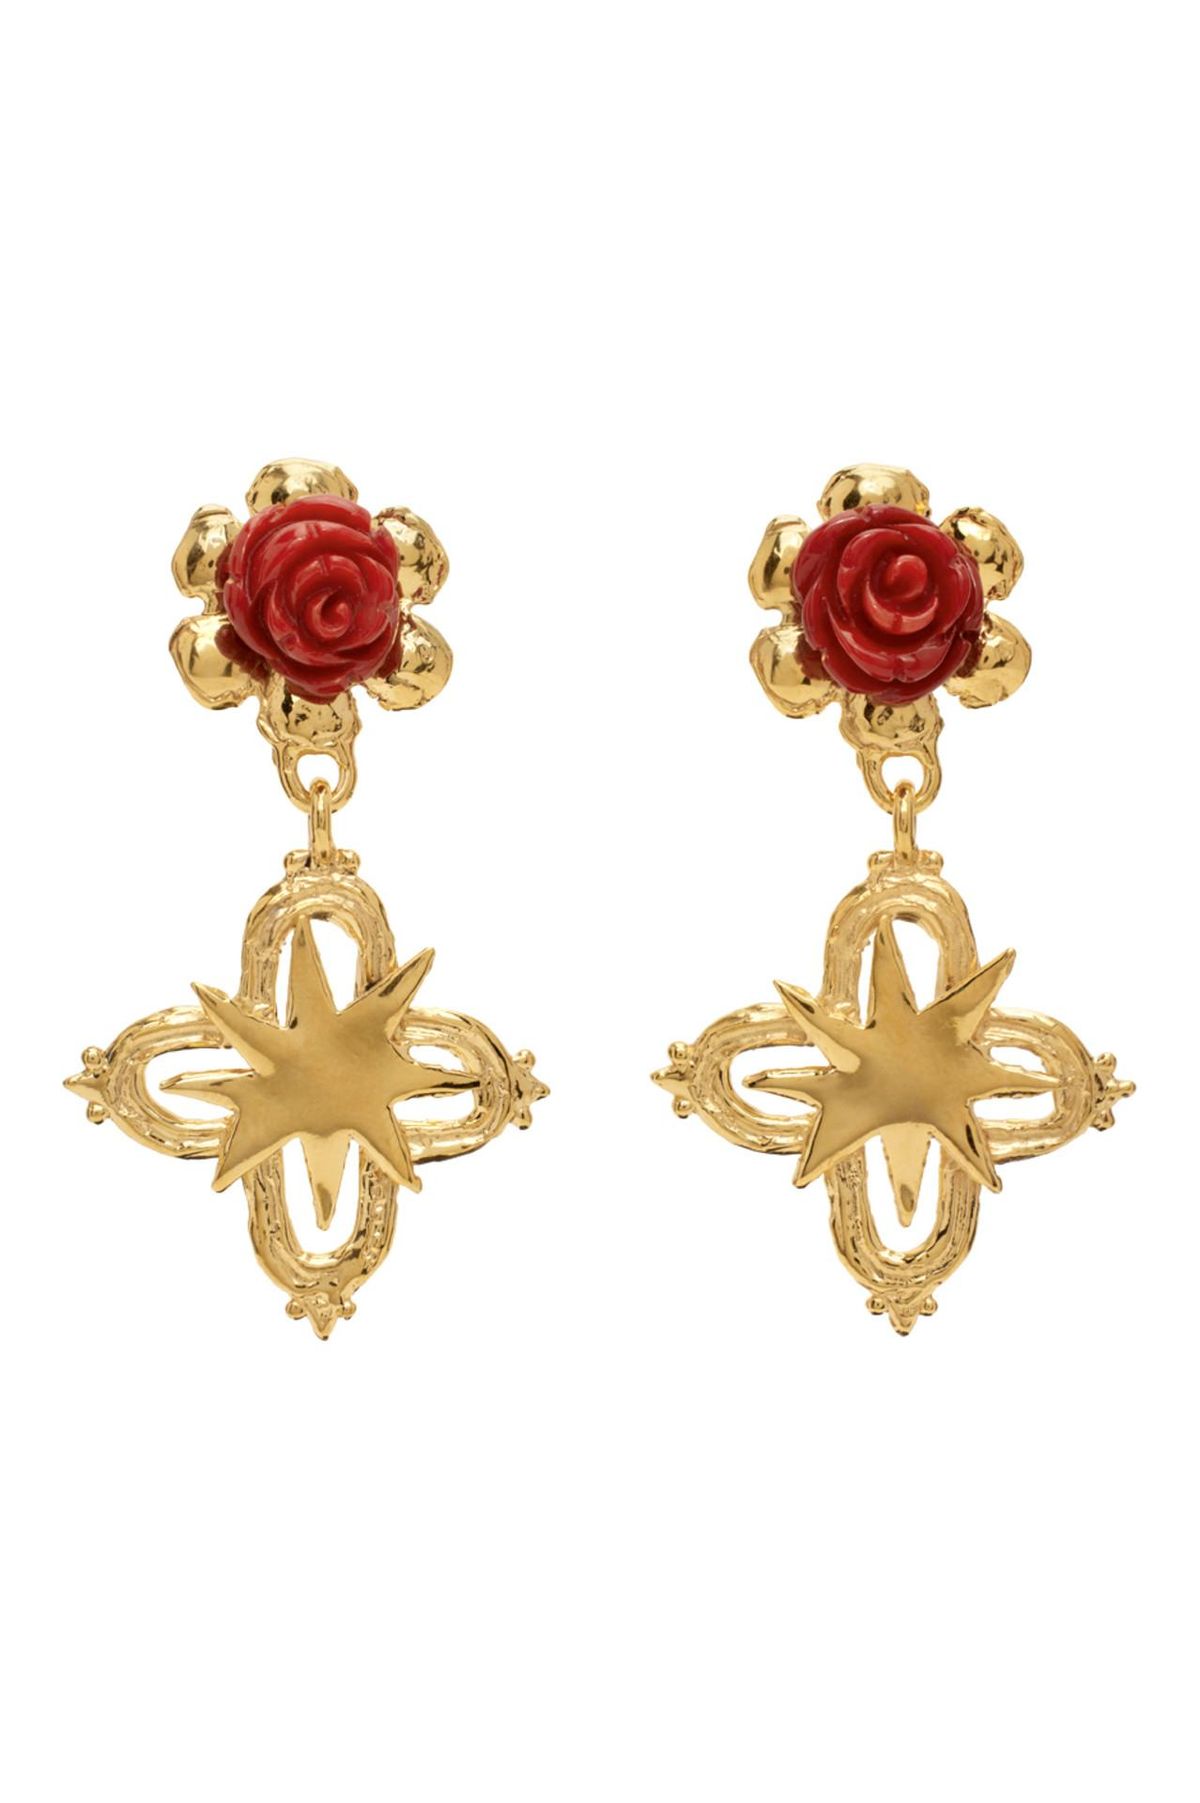 Rose Cross Earrings